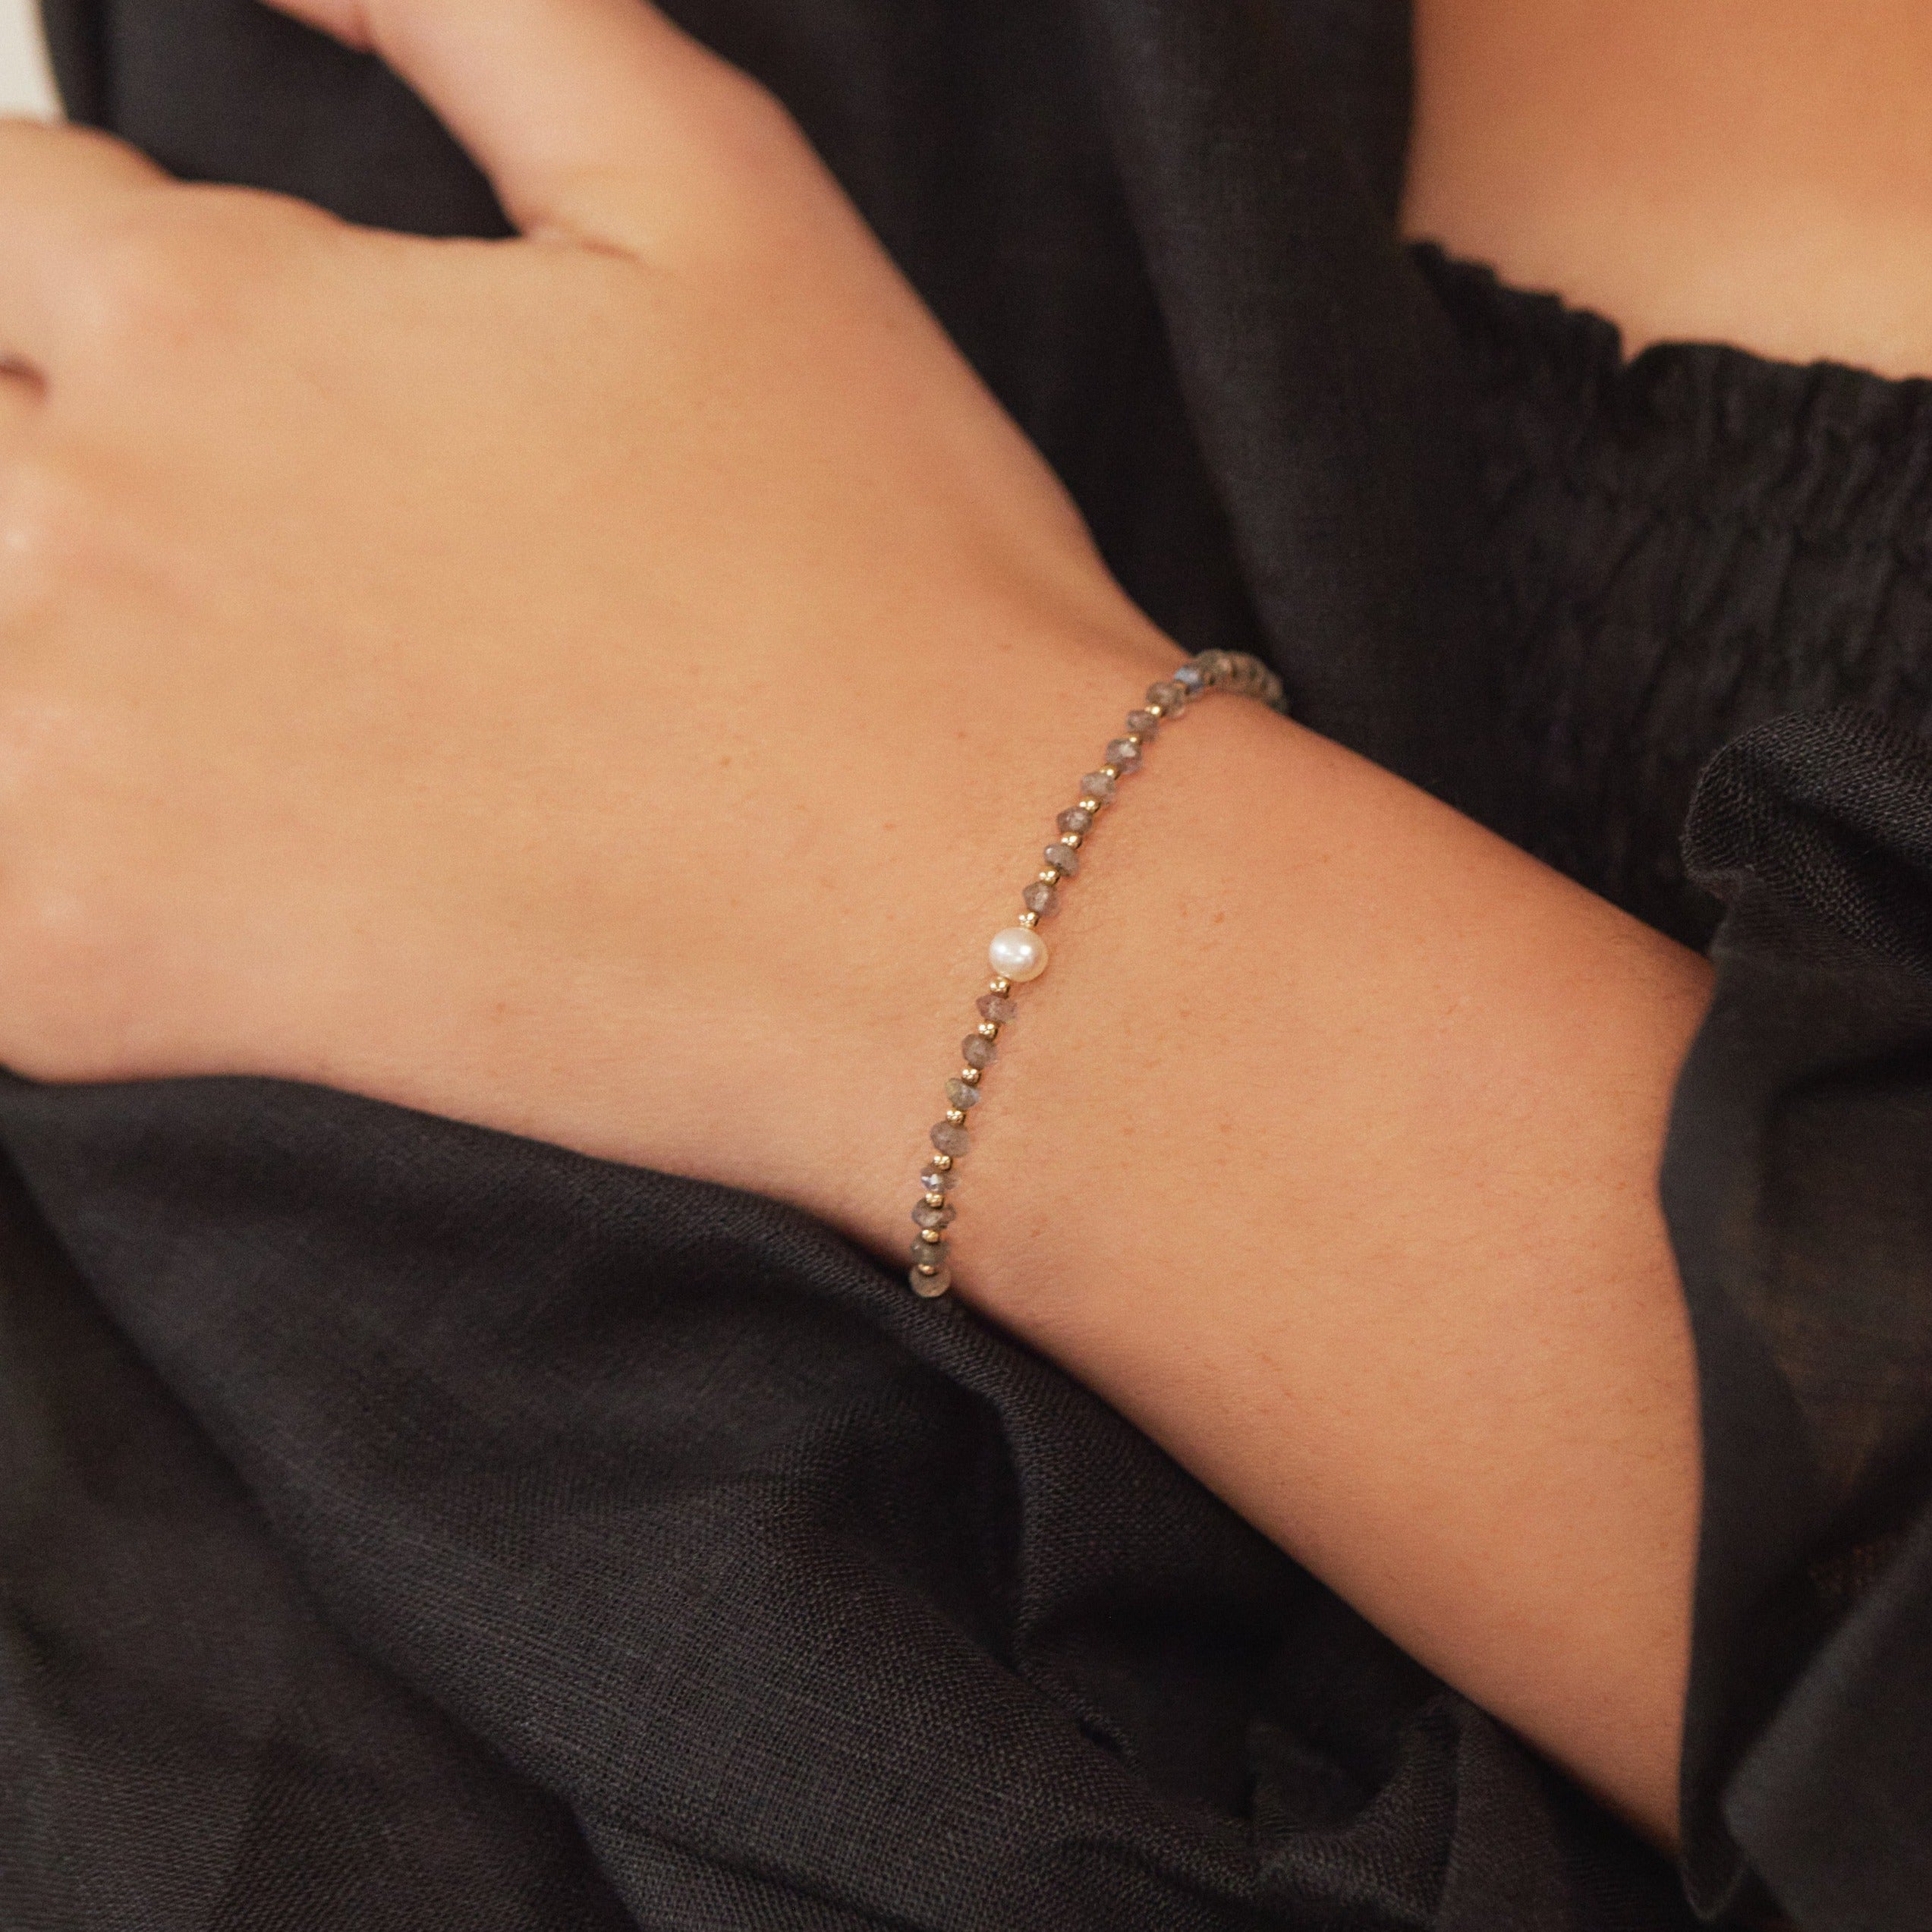 Gold labradorite gemstone bracelet on a wrist